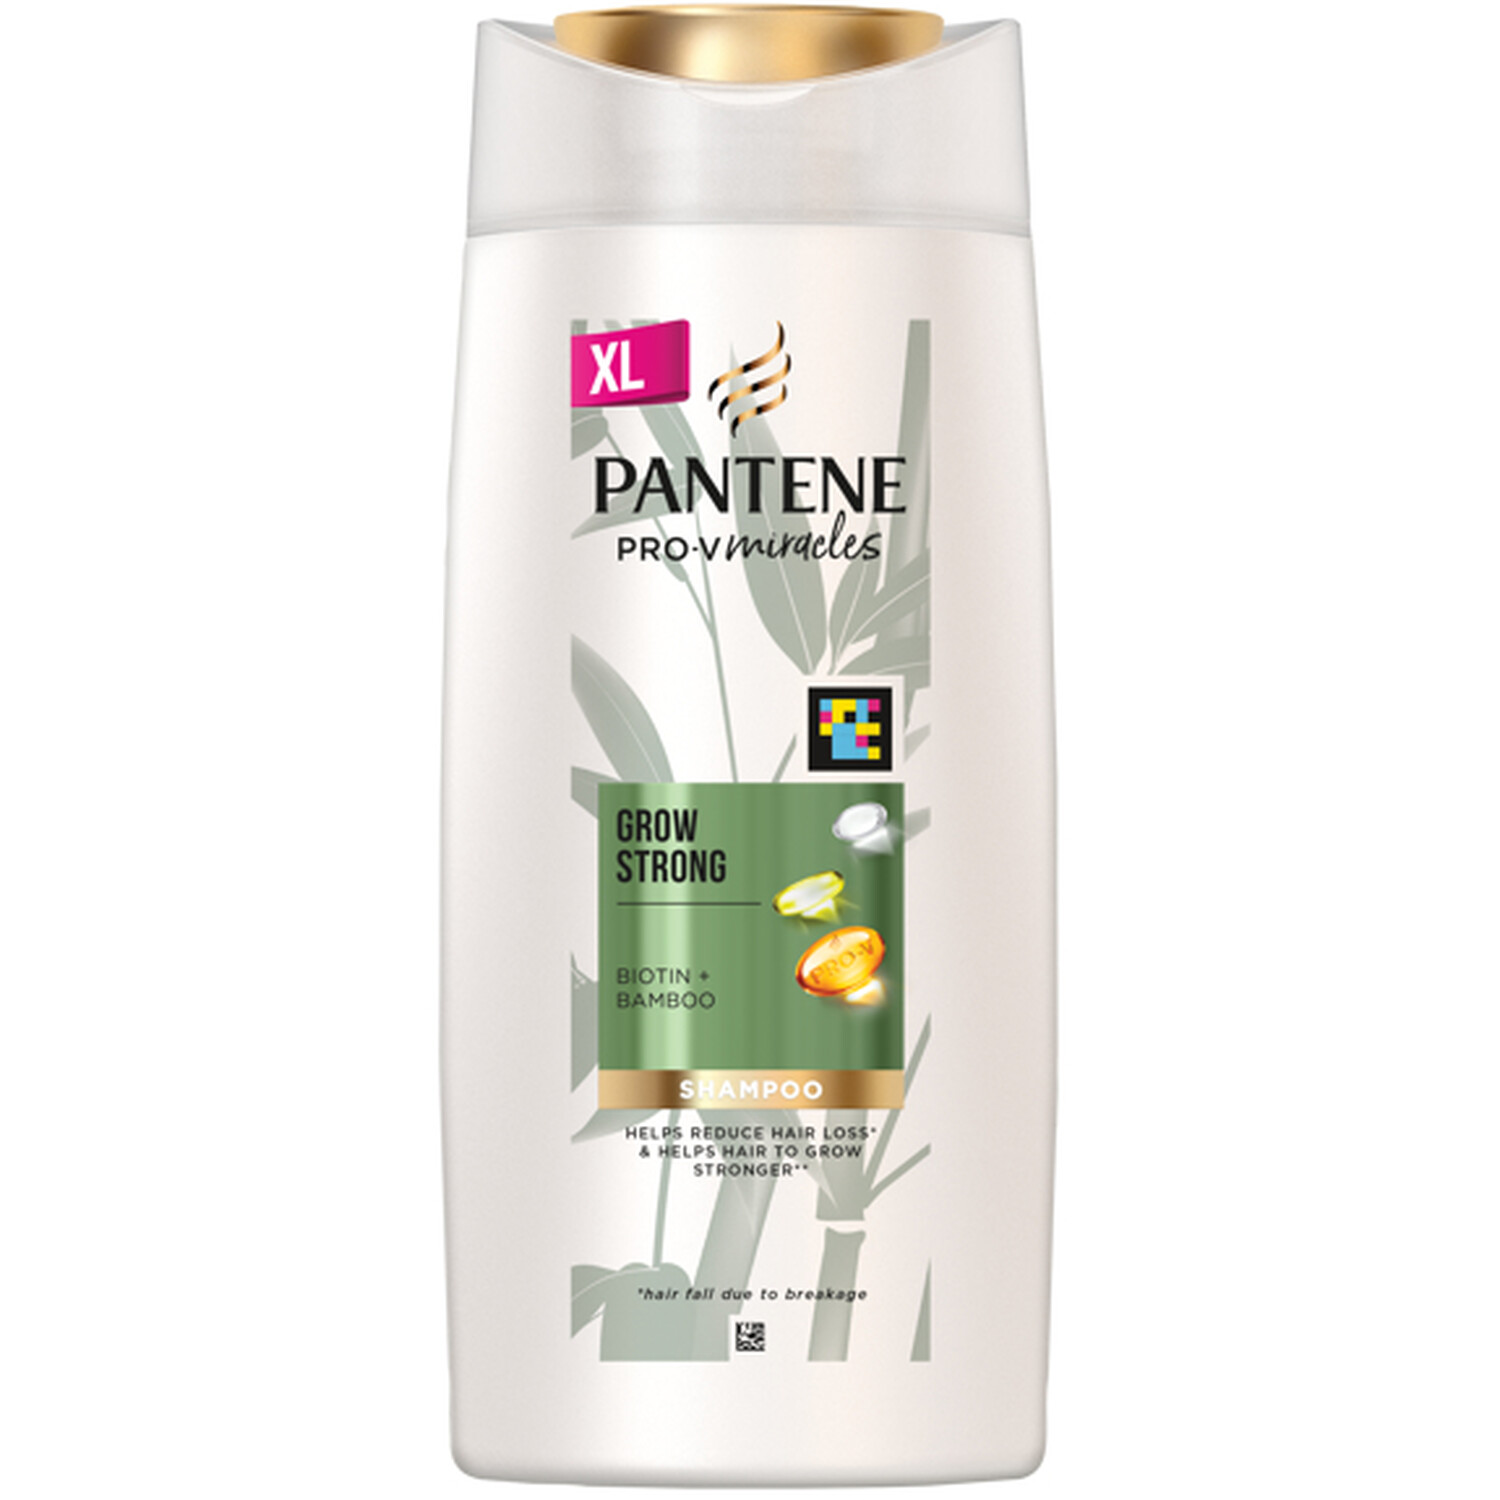 Pantene Pro-V Miracles Grow Strong Shampoo 600ml Image